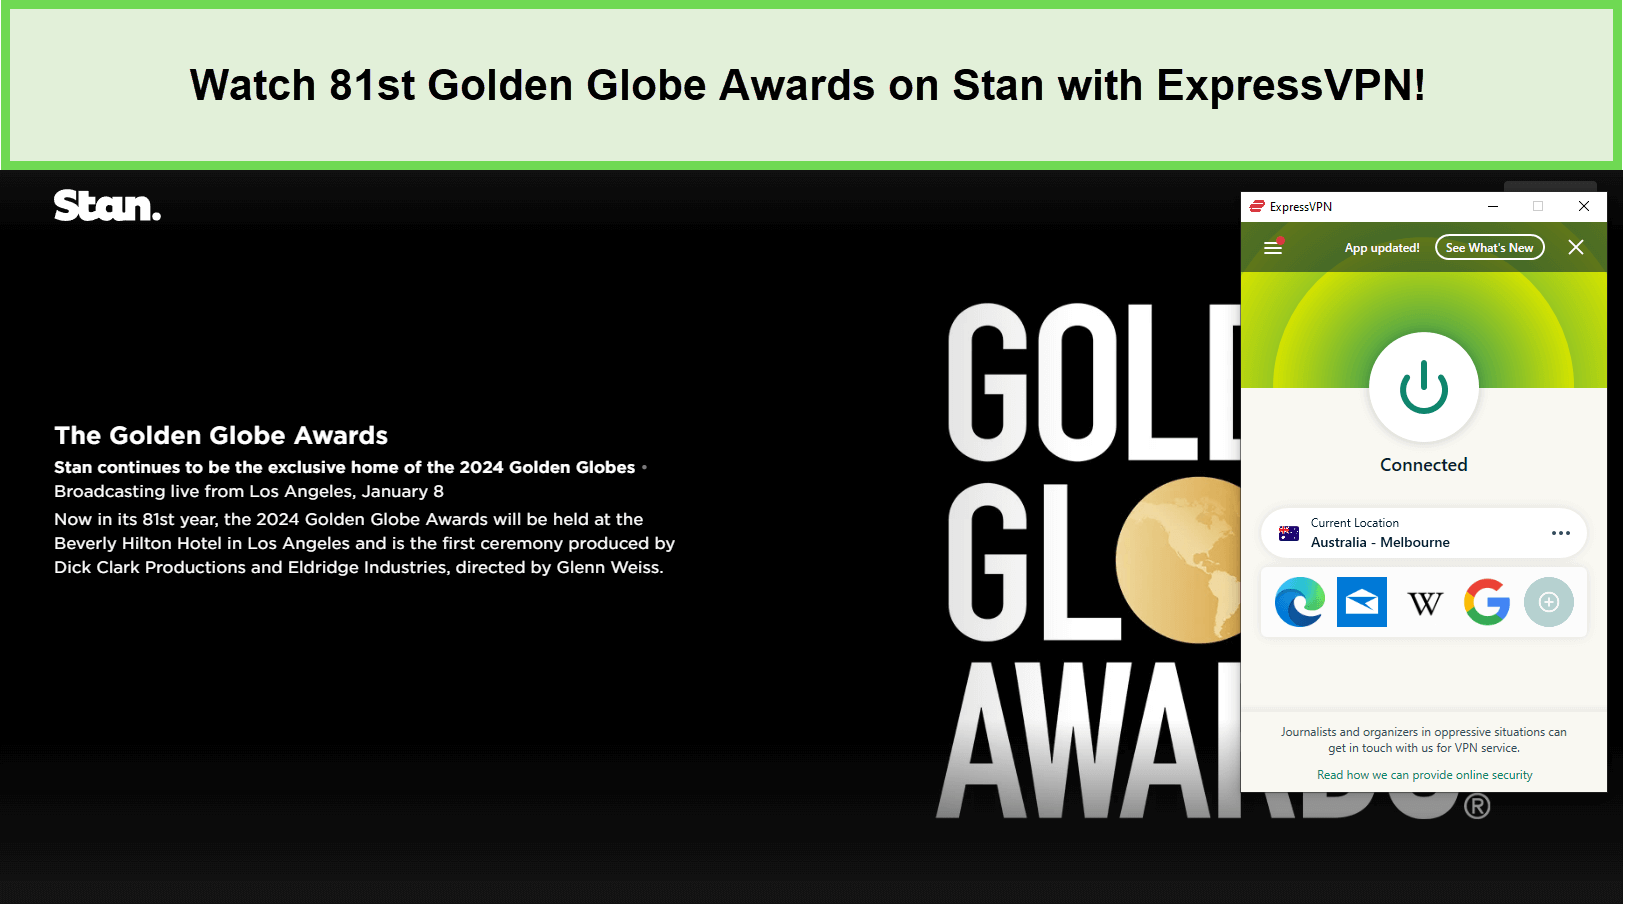 Watch-81st-Golden-Globe-Awards-outside-Australia-on-Stan-with-ExpressVPN